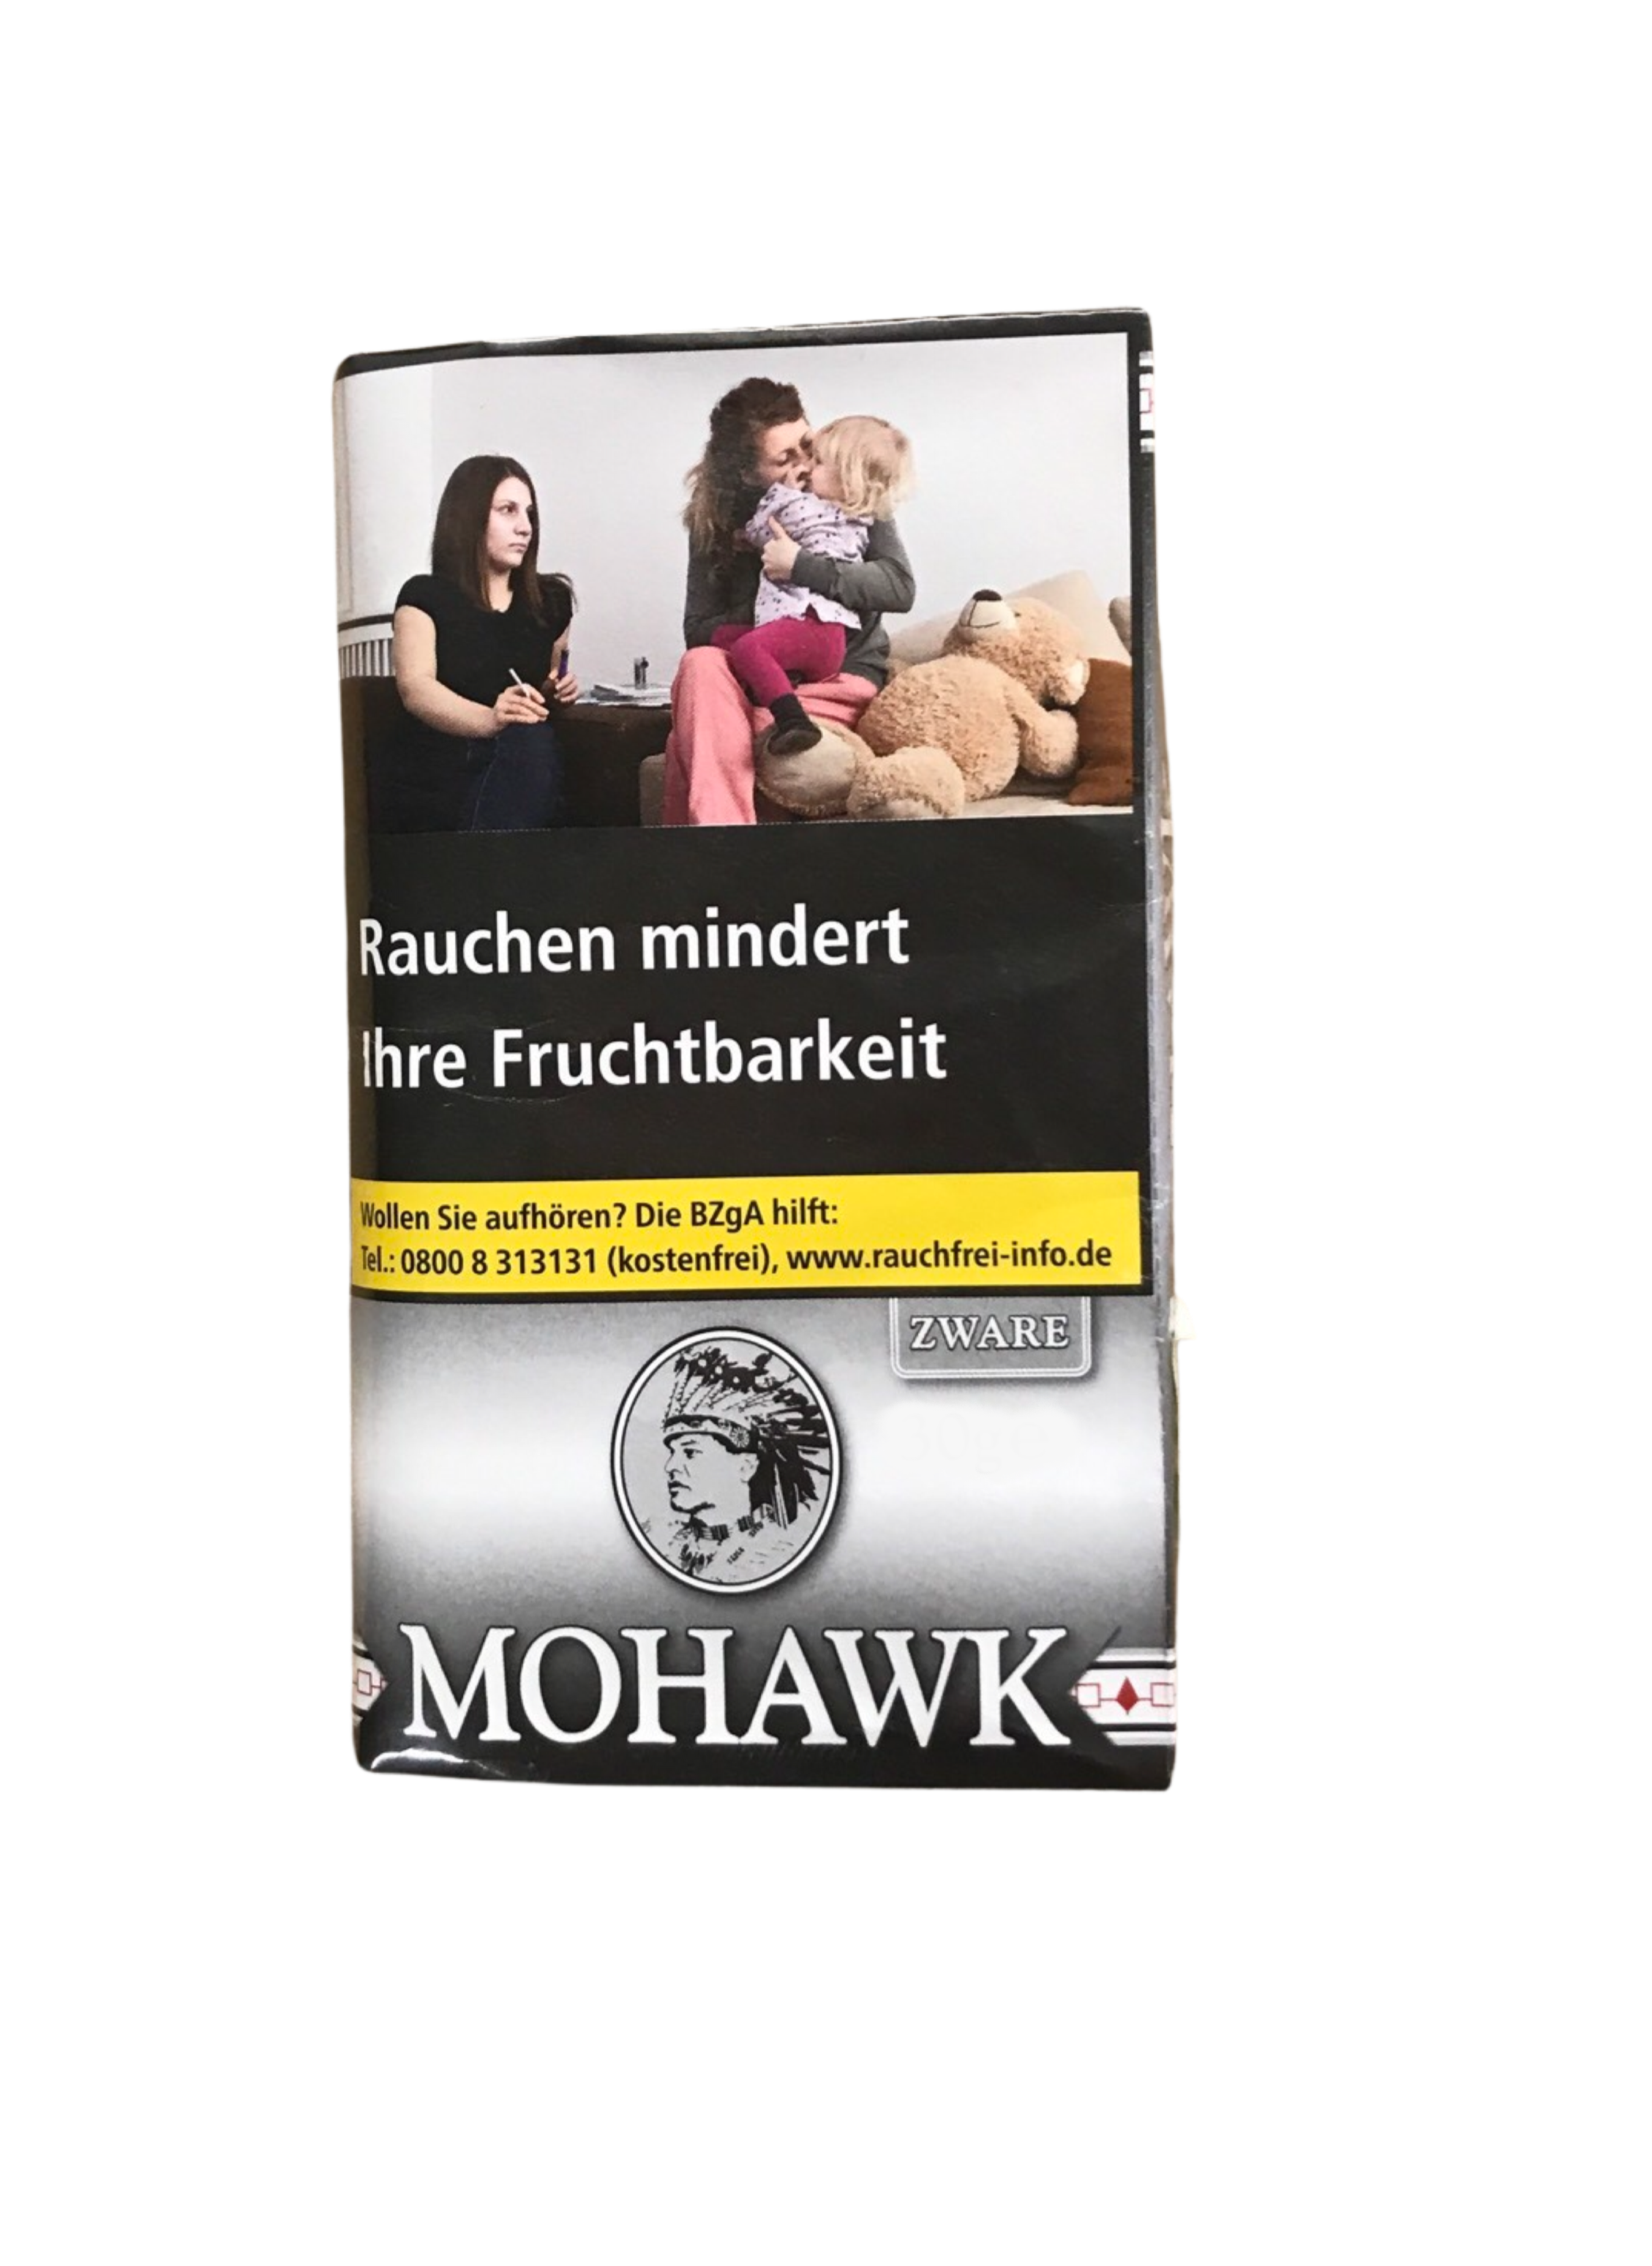 MOHAWK Zware (10)